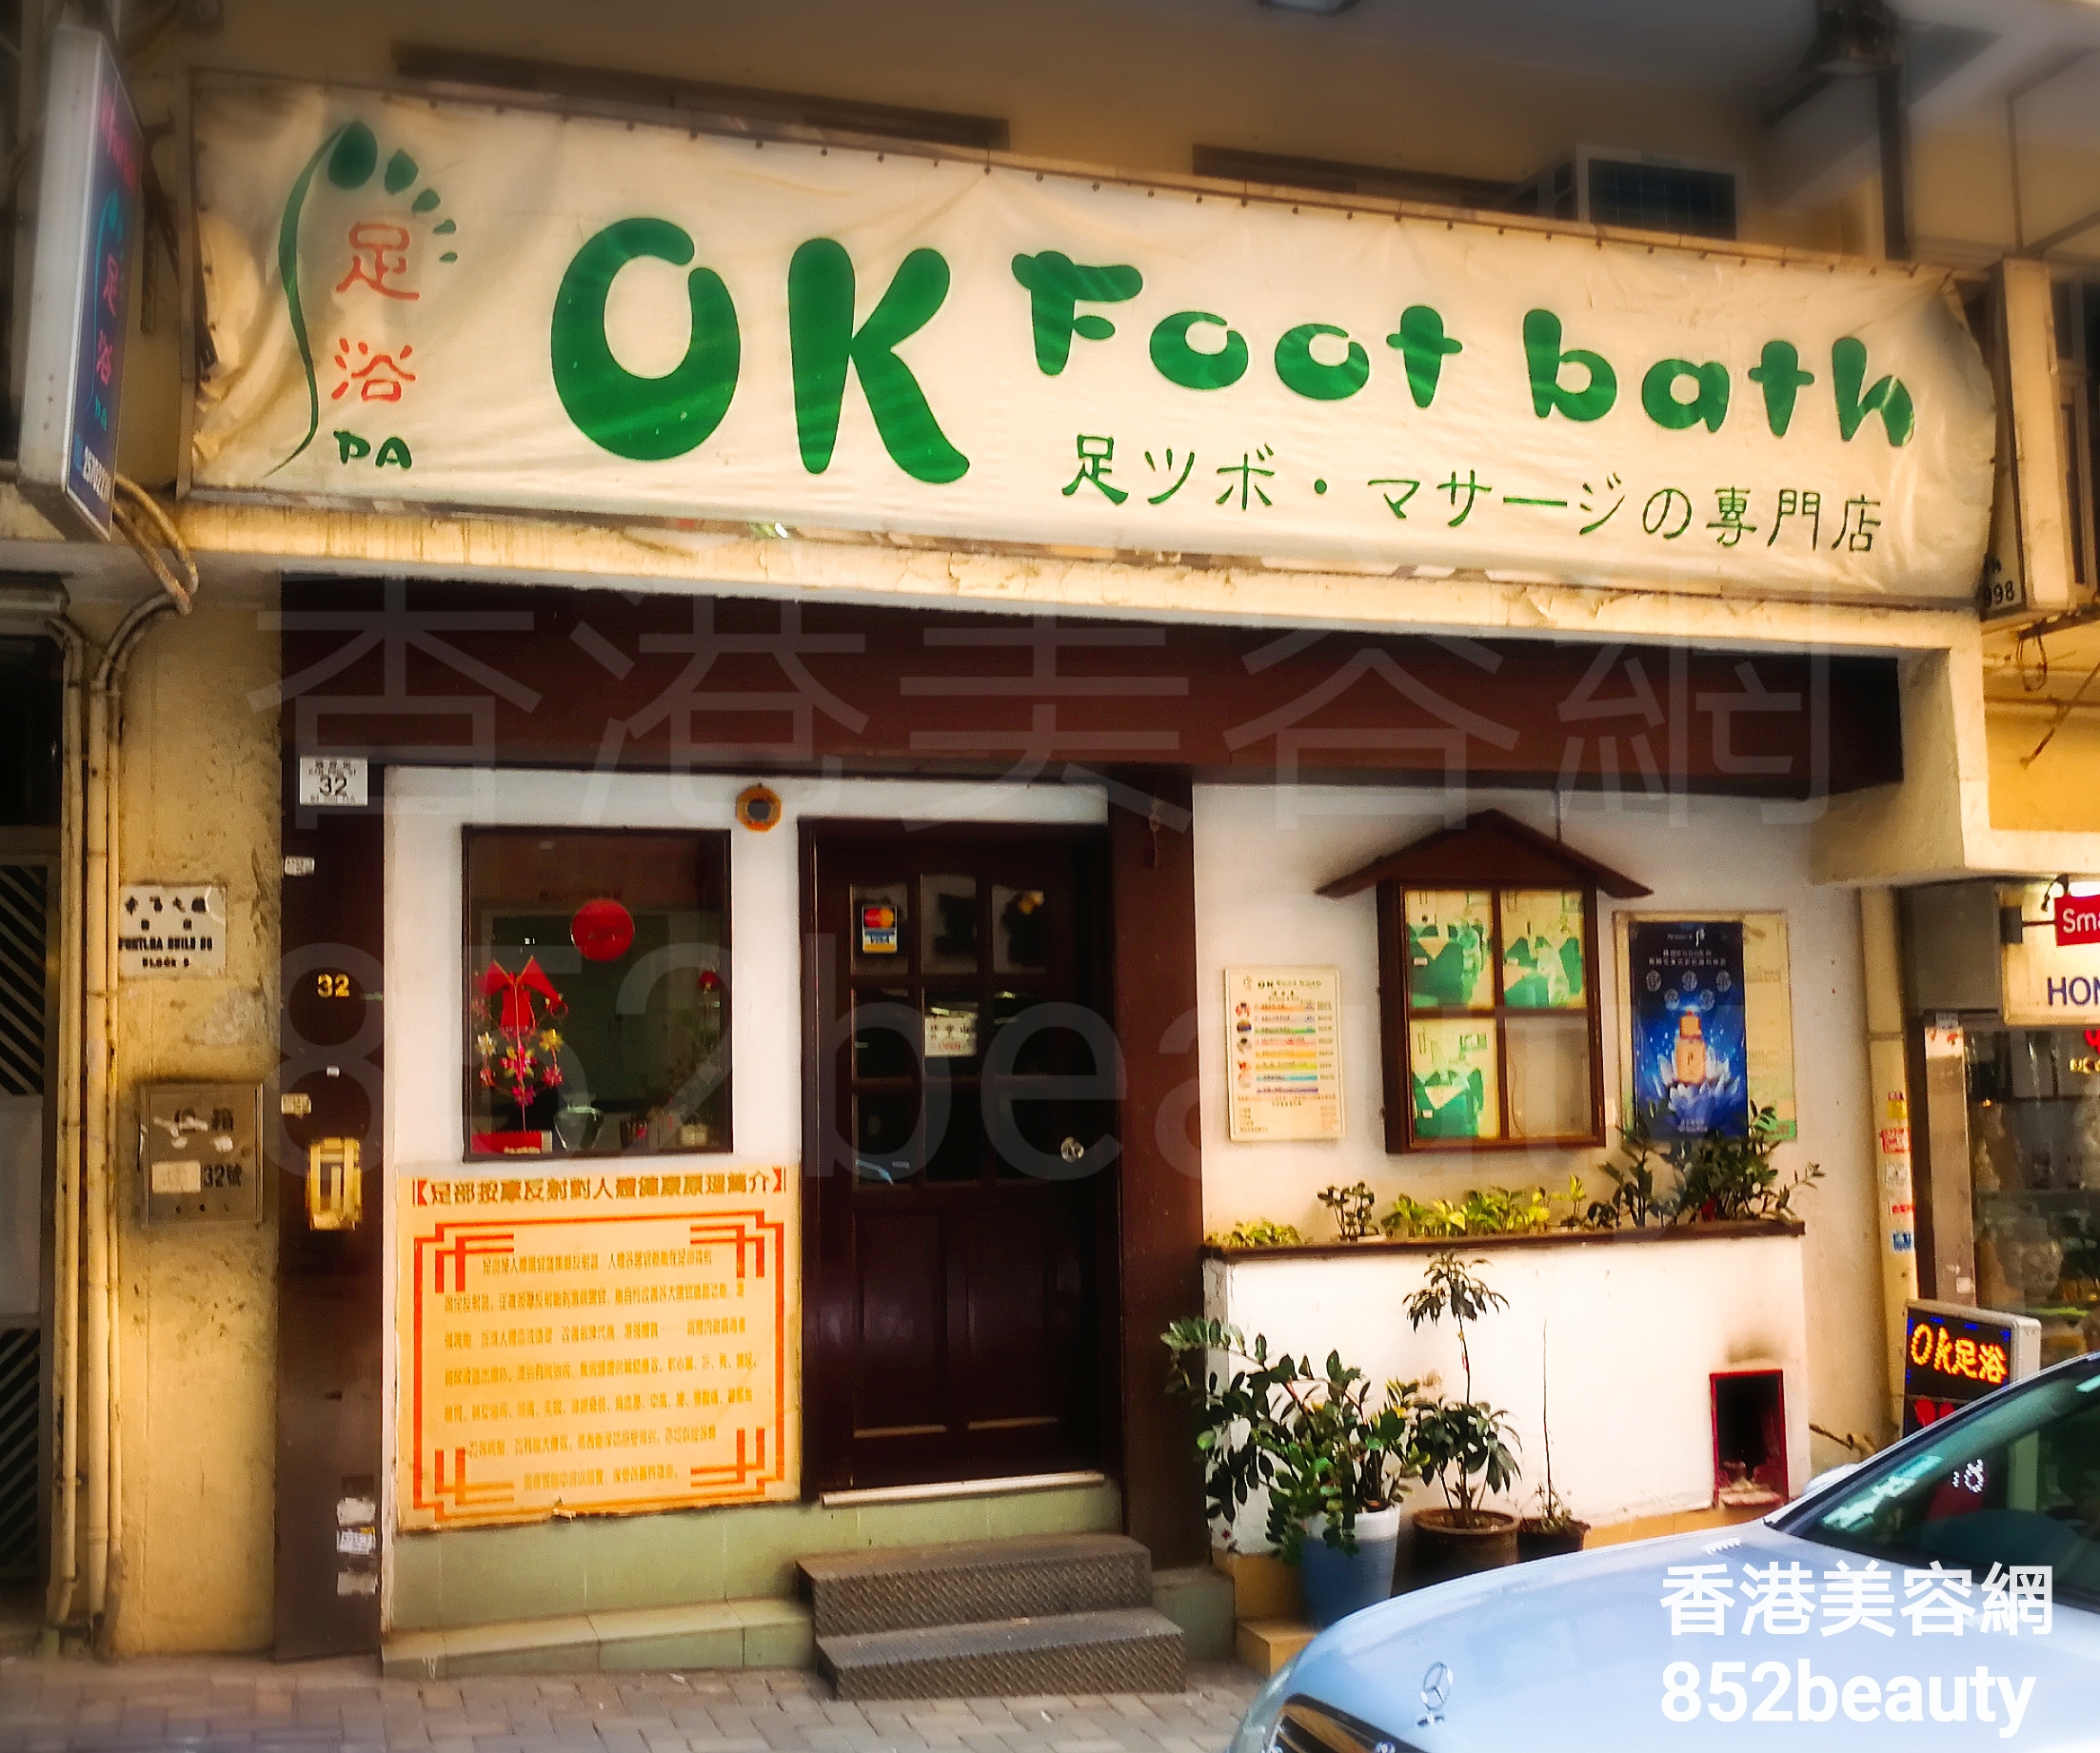 Facial Care: OK Foot bath